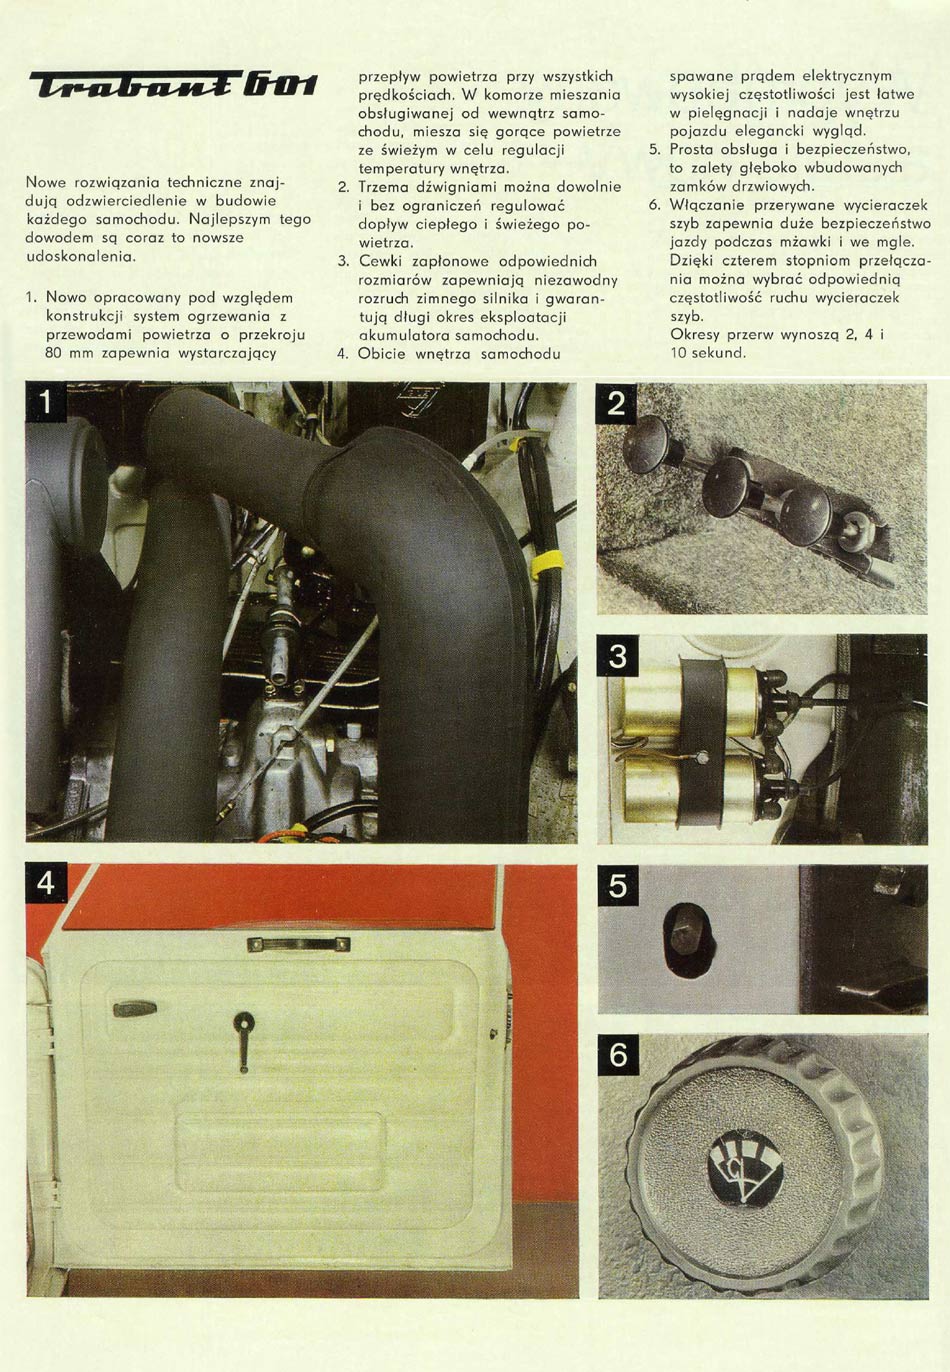 1974 - Trabant 601 - Seite 3